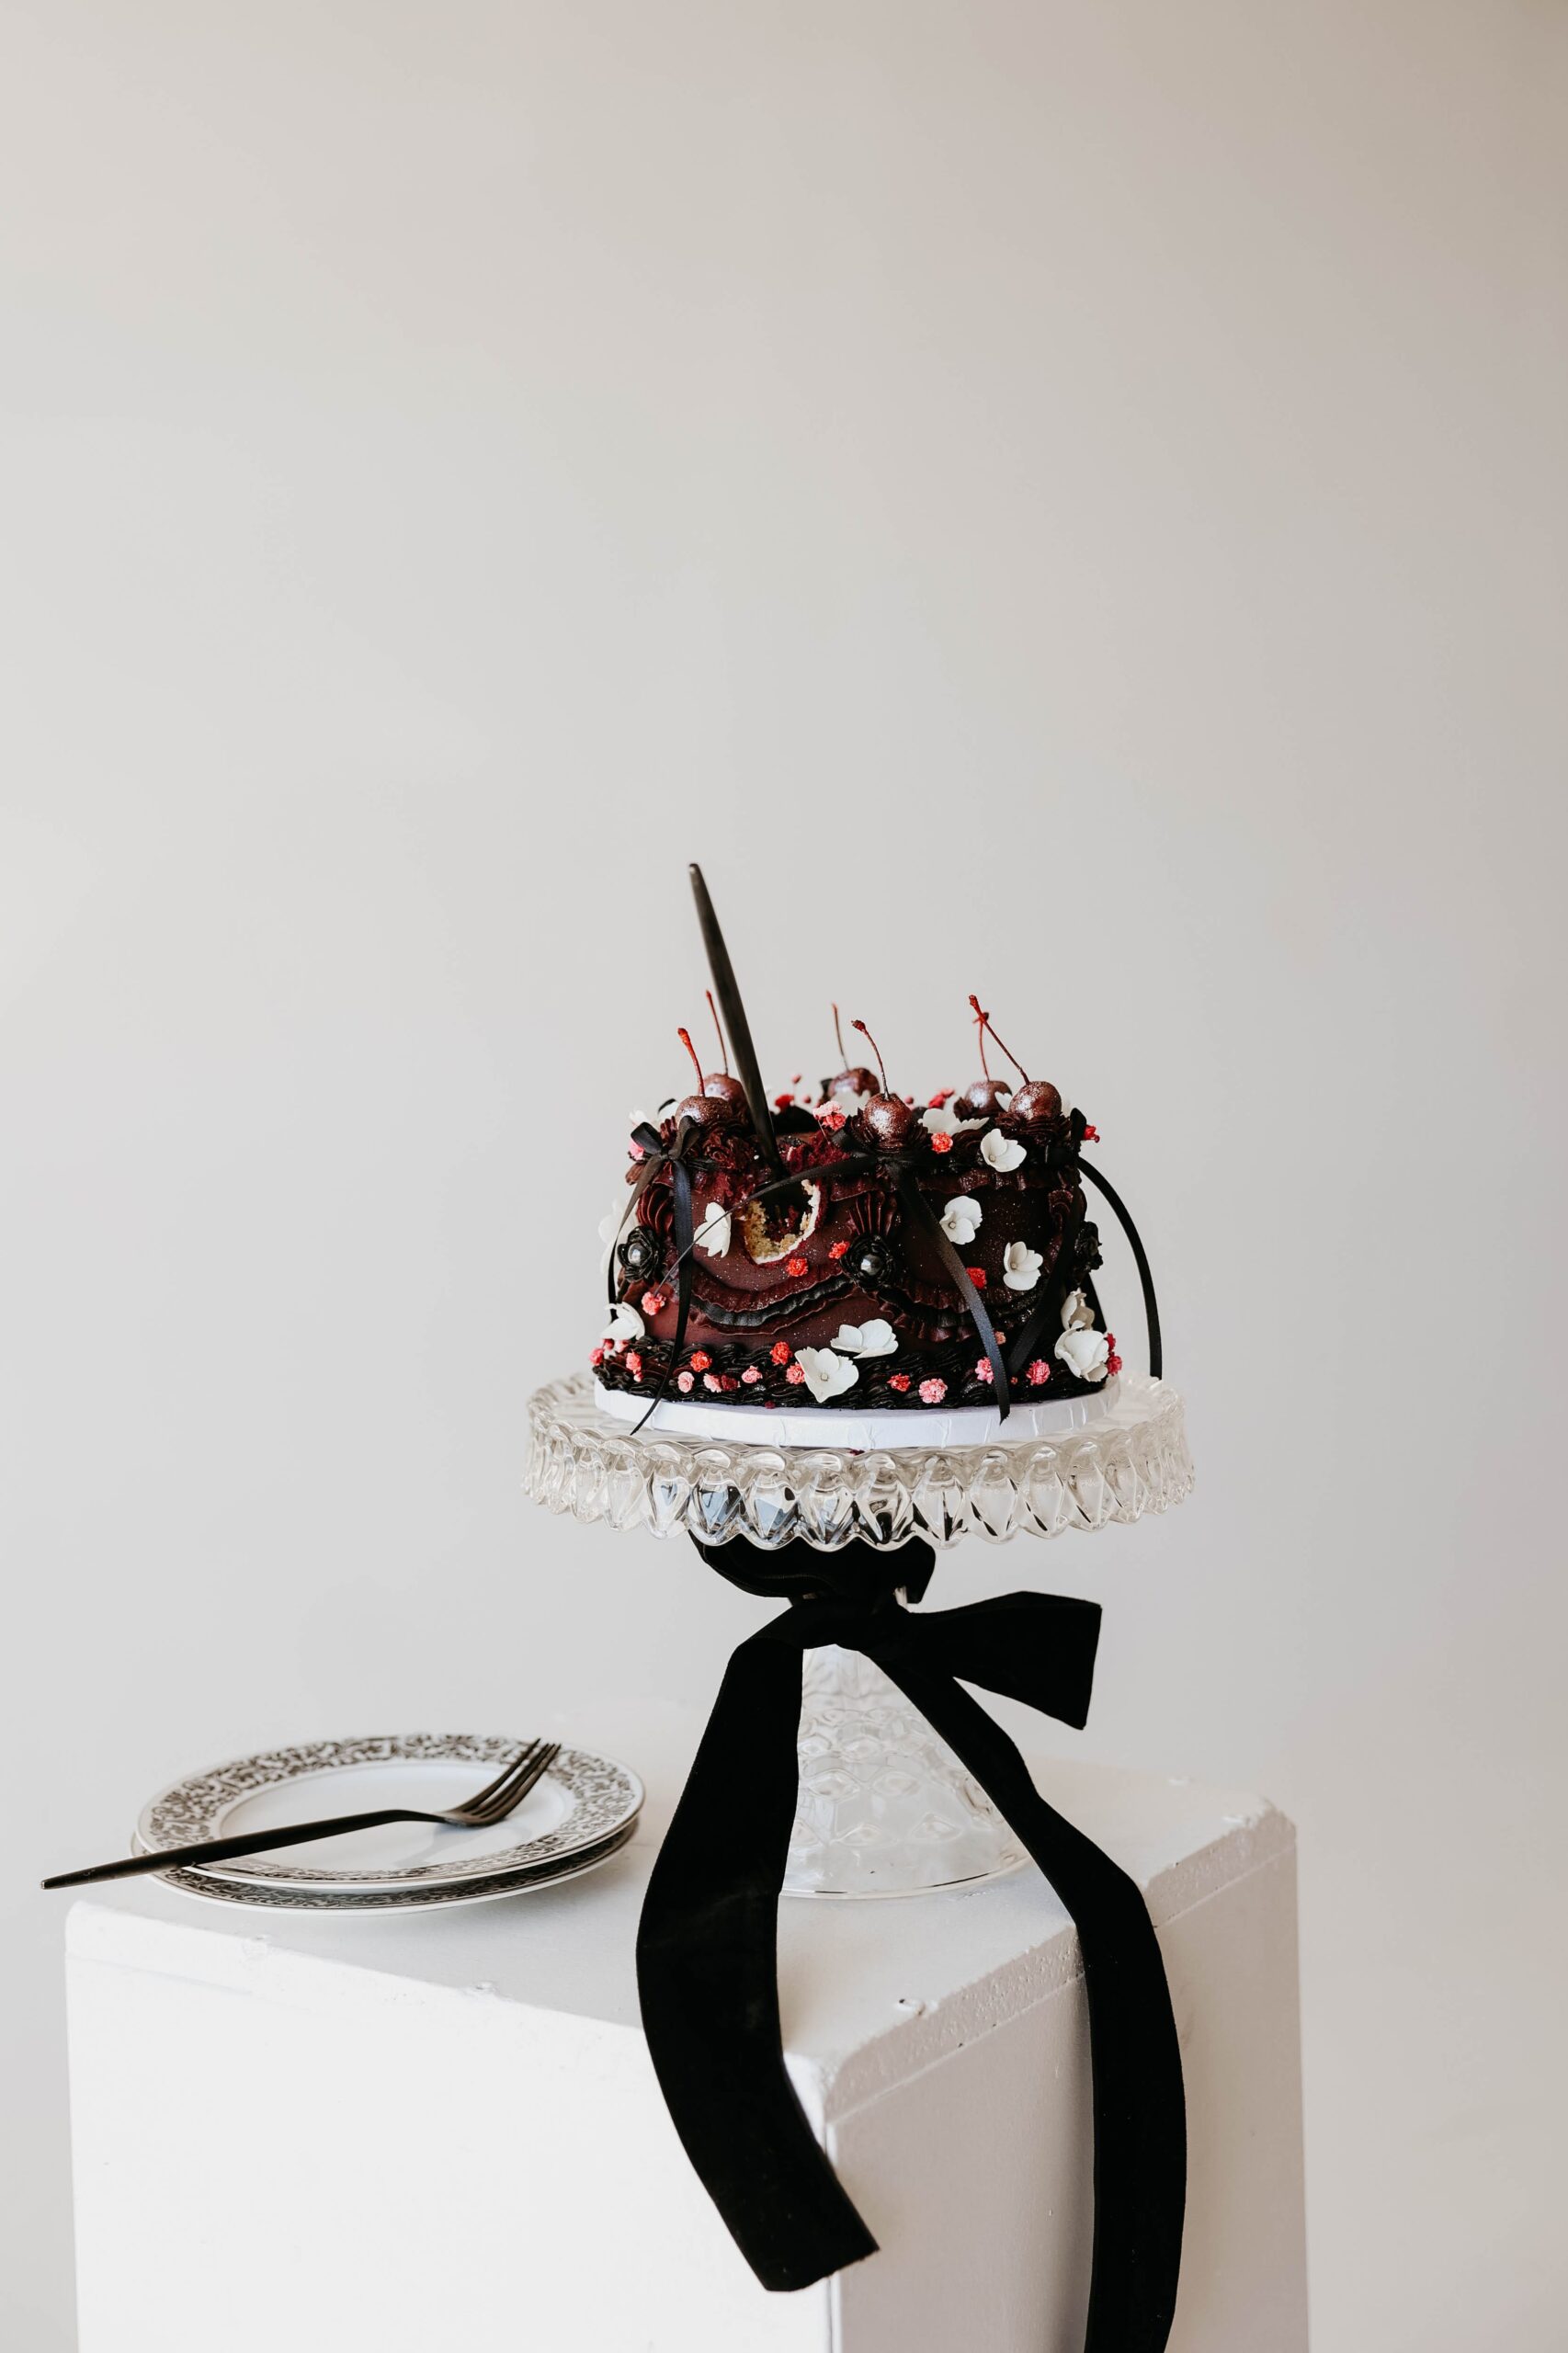 chocolate wedding cake on a standing 